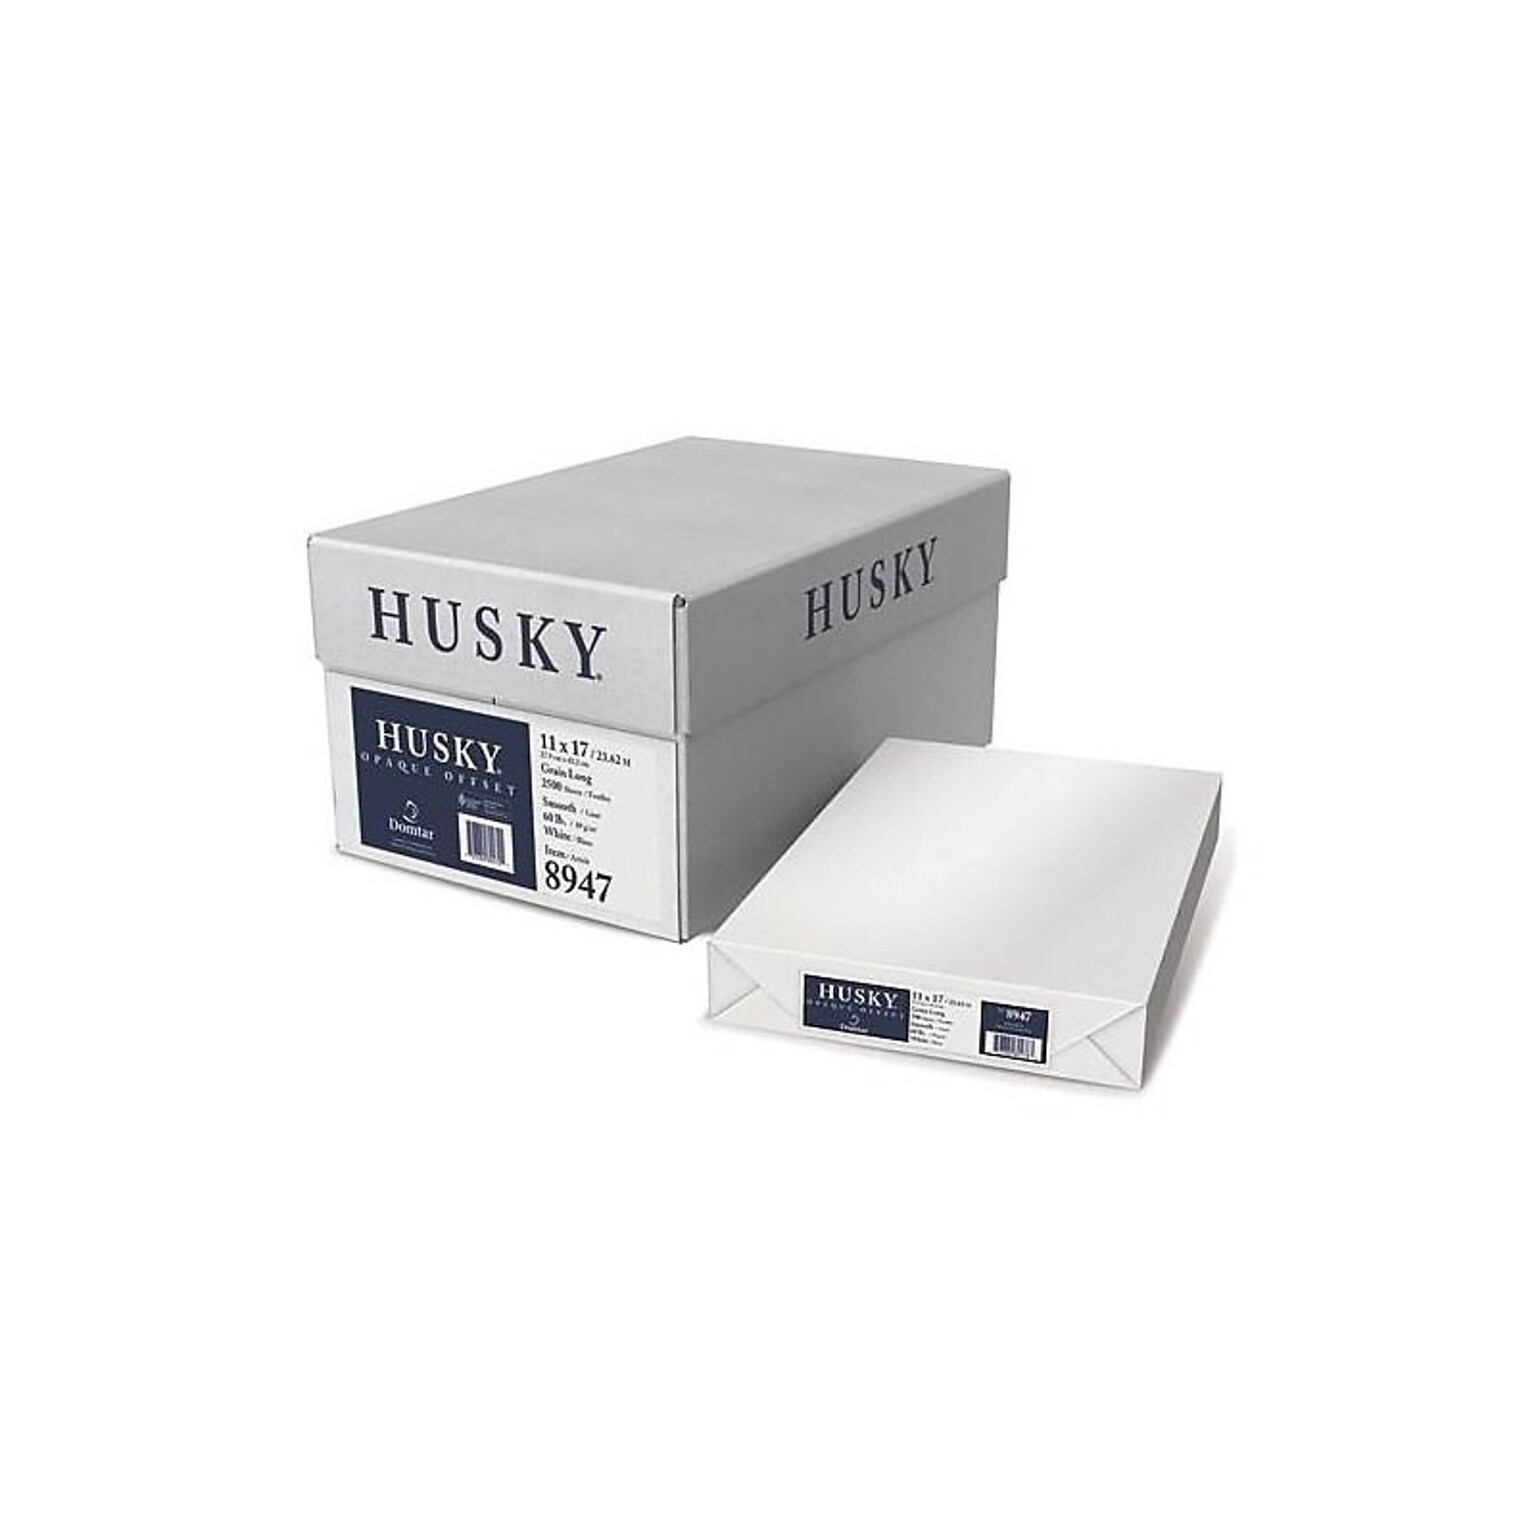 Domtar Husky Opaque Offset 11 x 17 Multipurpose Paper, 60 lbs., 94 Brightness, 500/Ream, 5 Reams/Carton (8947)